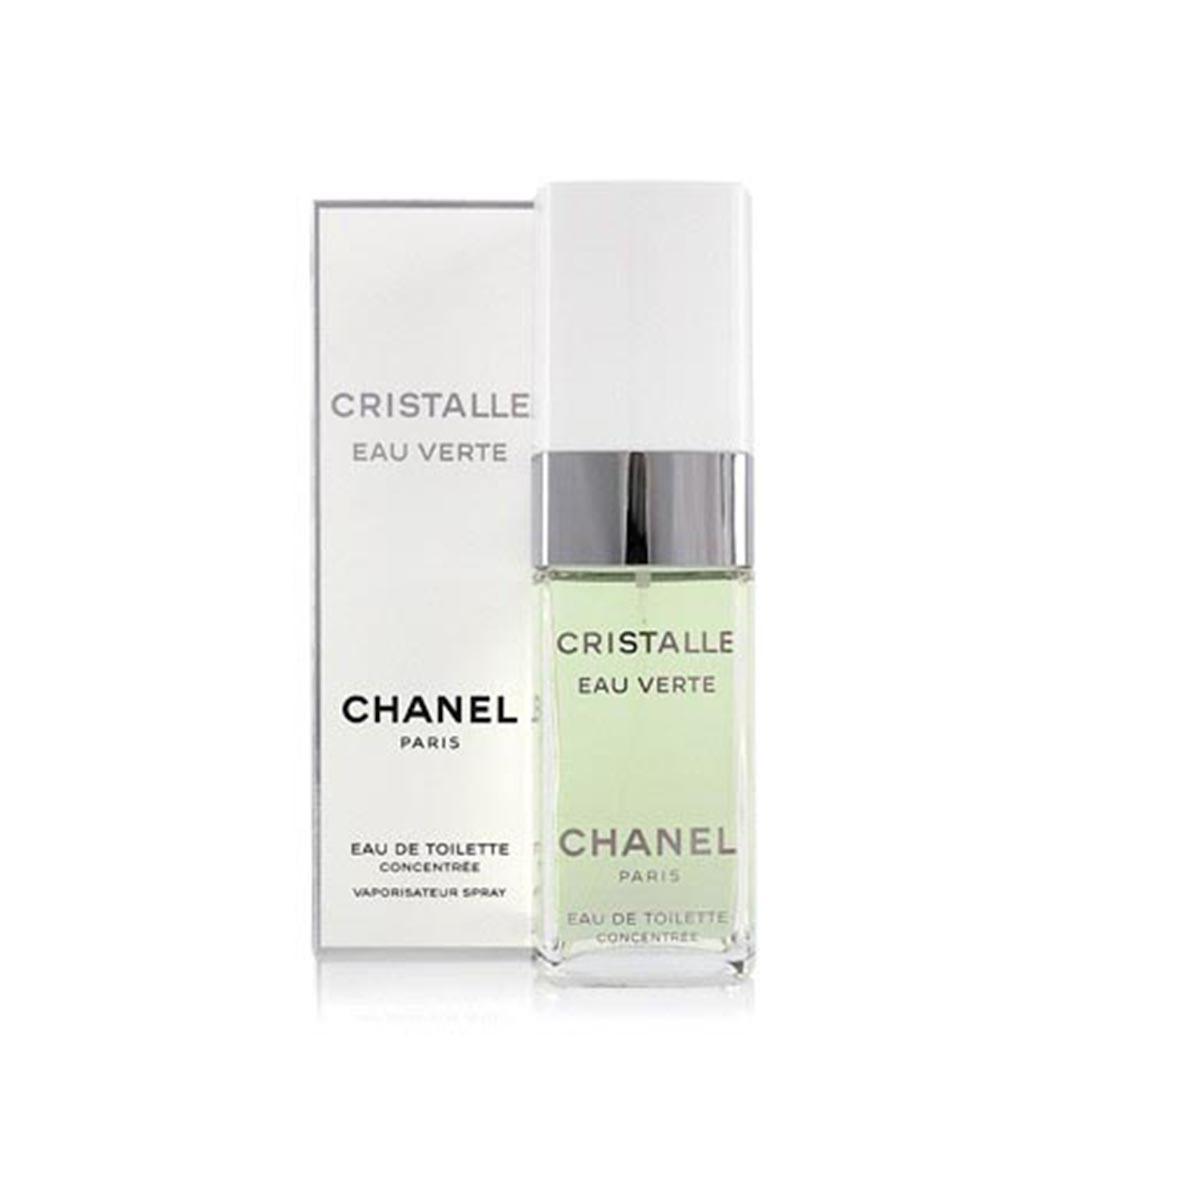 Chanel Cristalle Eau Verte Concentree 50ml | Dressinn